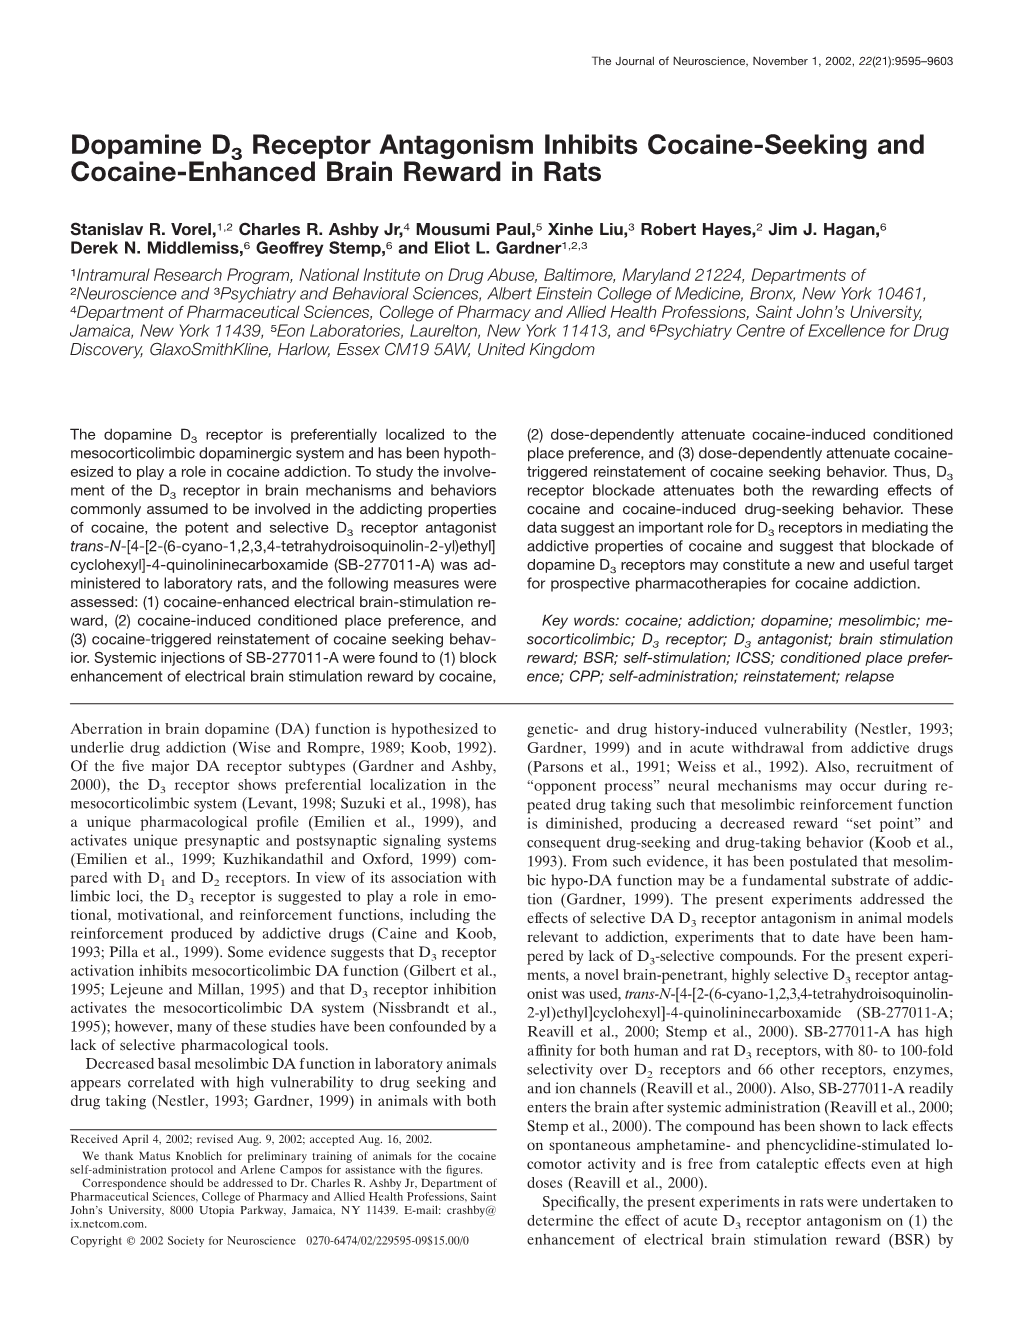 Dopamine D3 Receptor Antagonism Inhibits Cocaine-Seeking and Cocaine-Enhanced Brain Reward in Rats